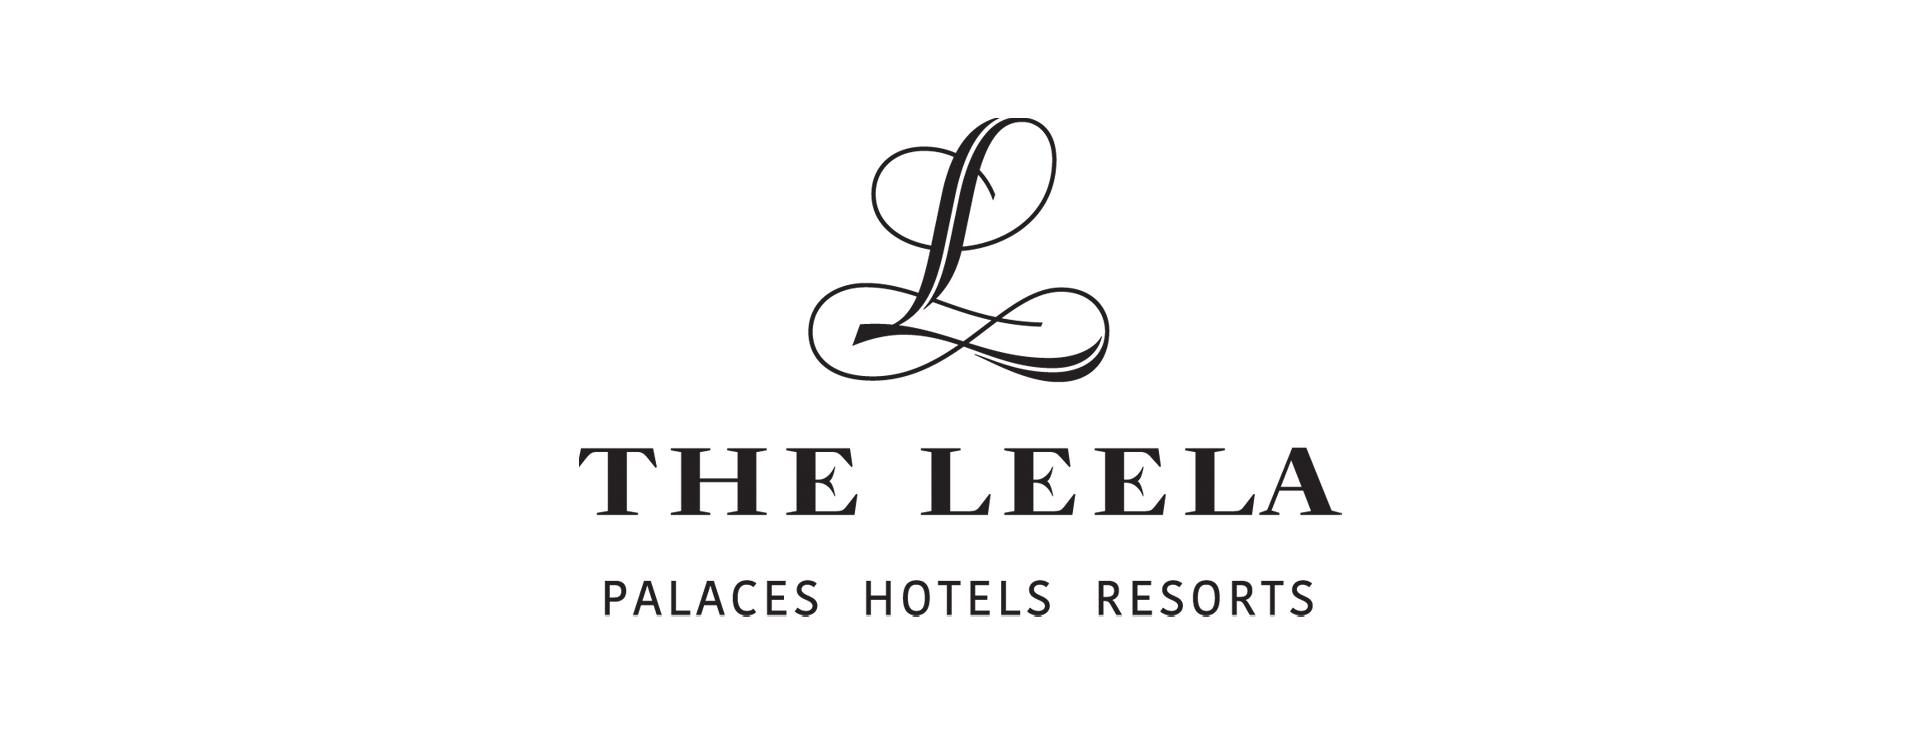 THE LEELA PALACES